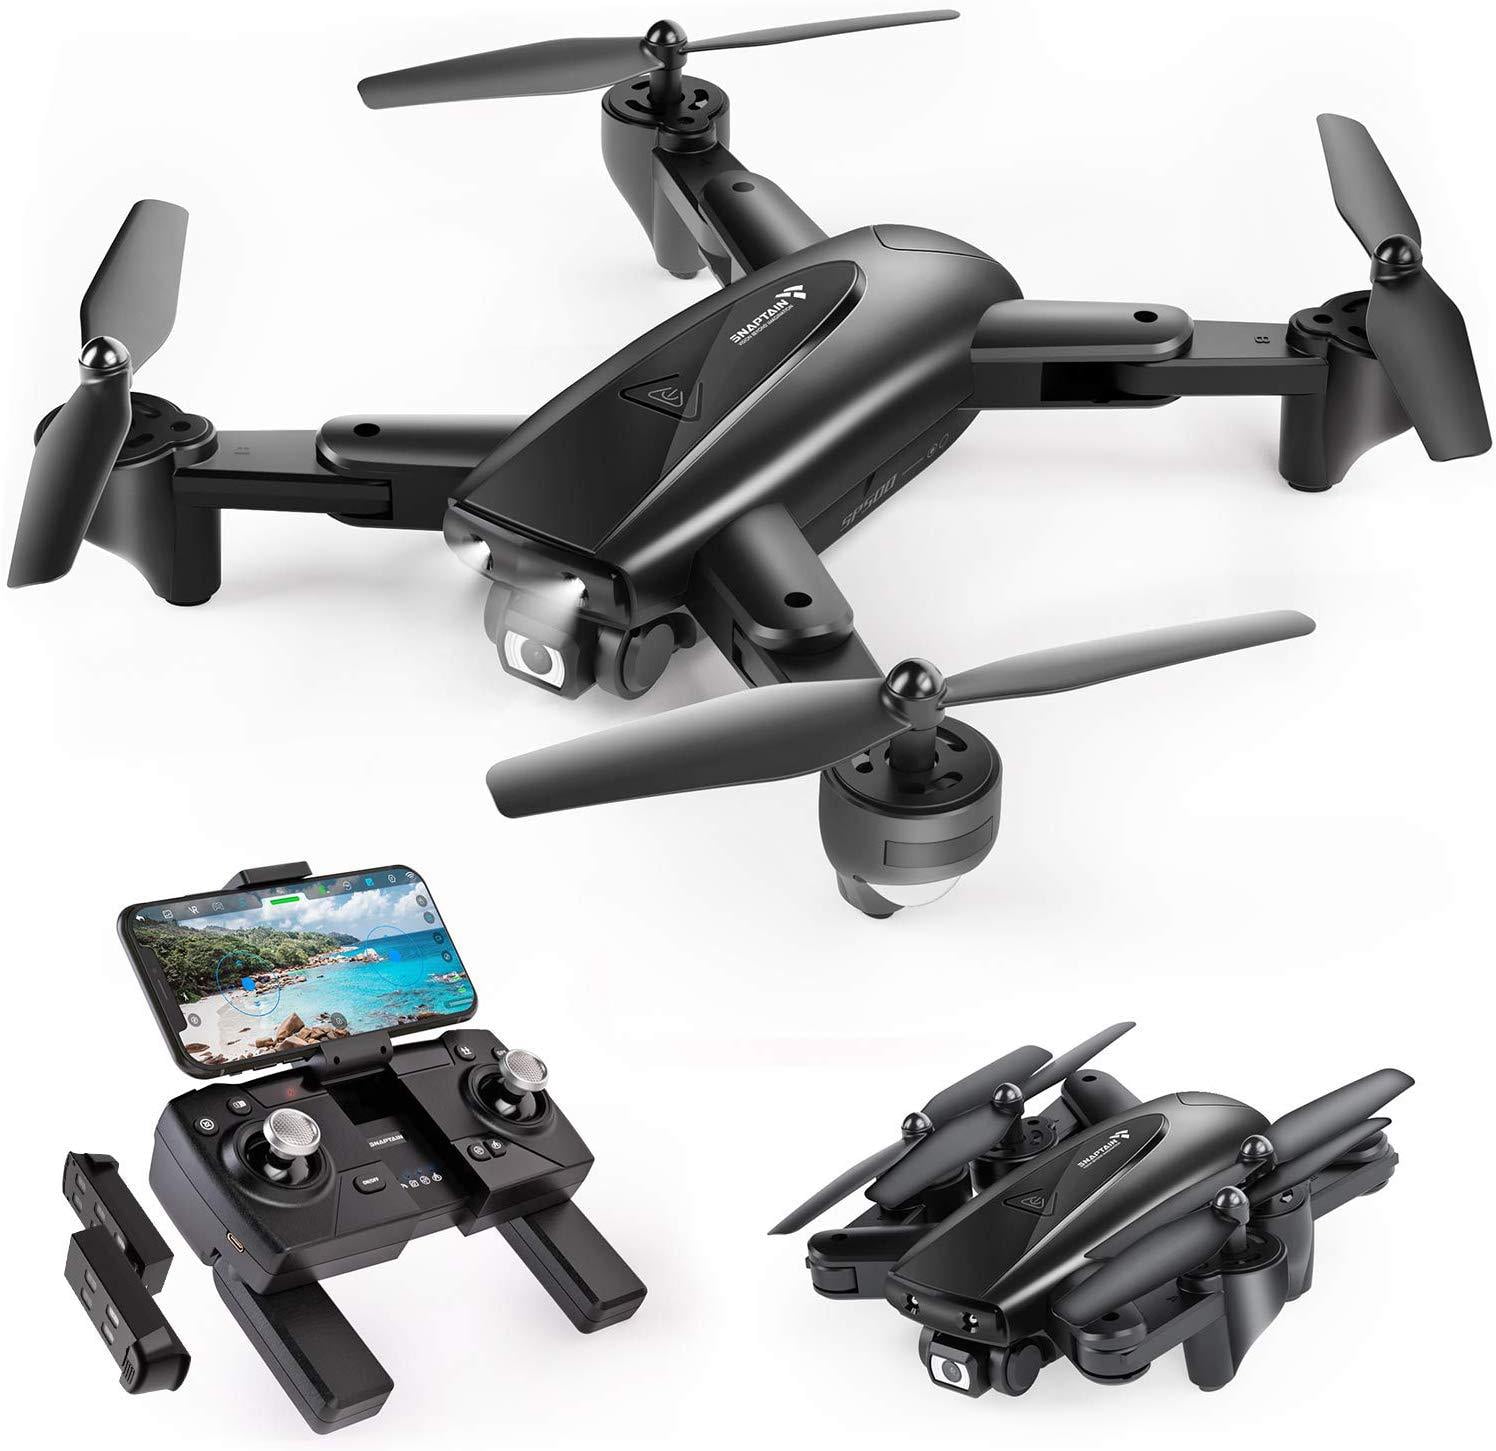 SNAPTAIN SP600 WiFi FPV Drone RC Quadcopter w/720P Camera 